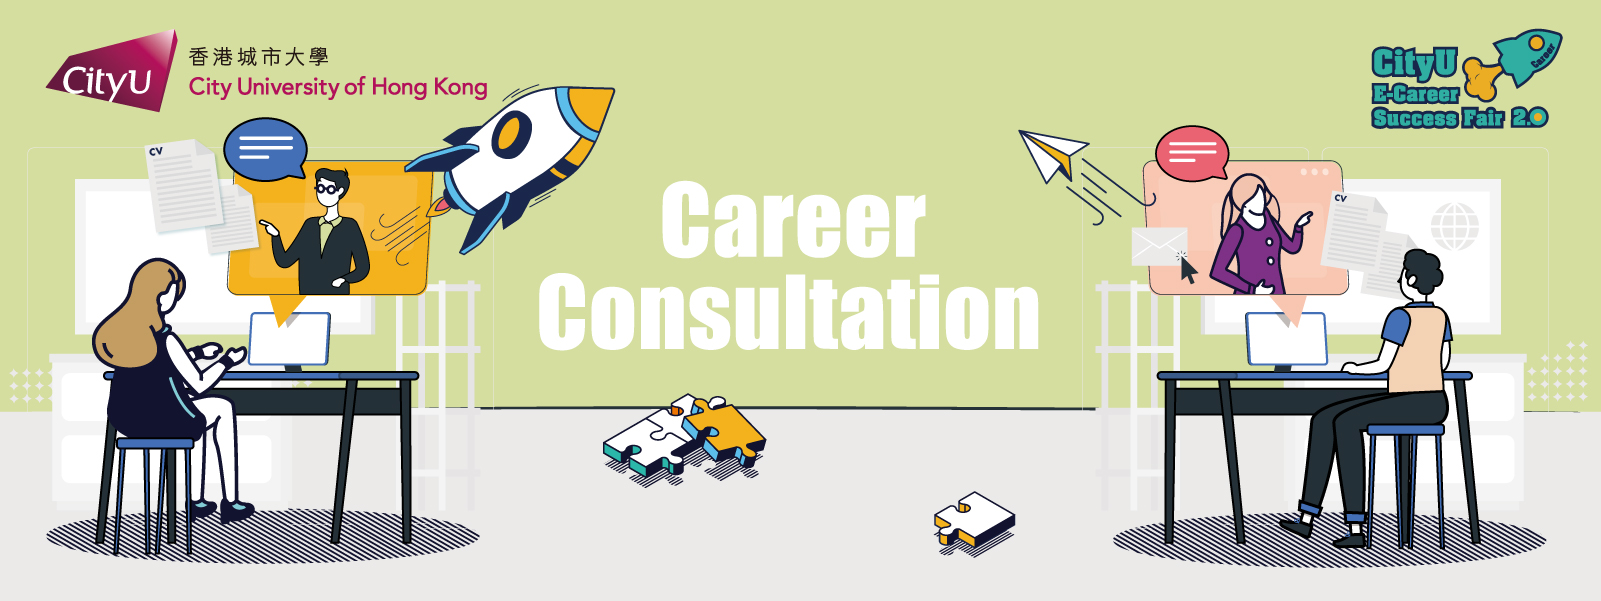 City University Career Consultation